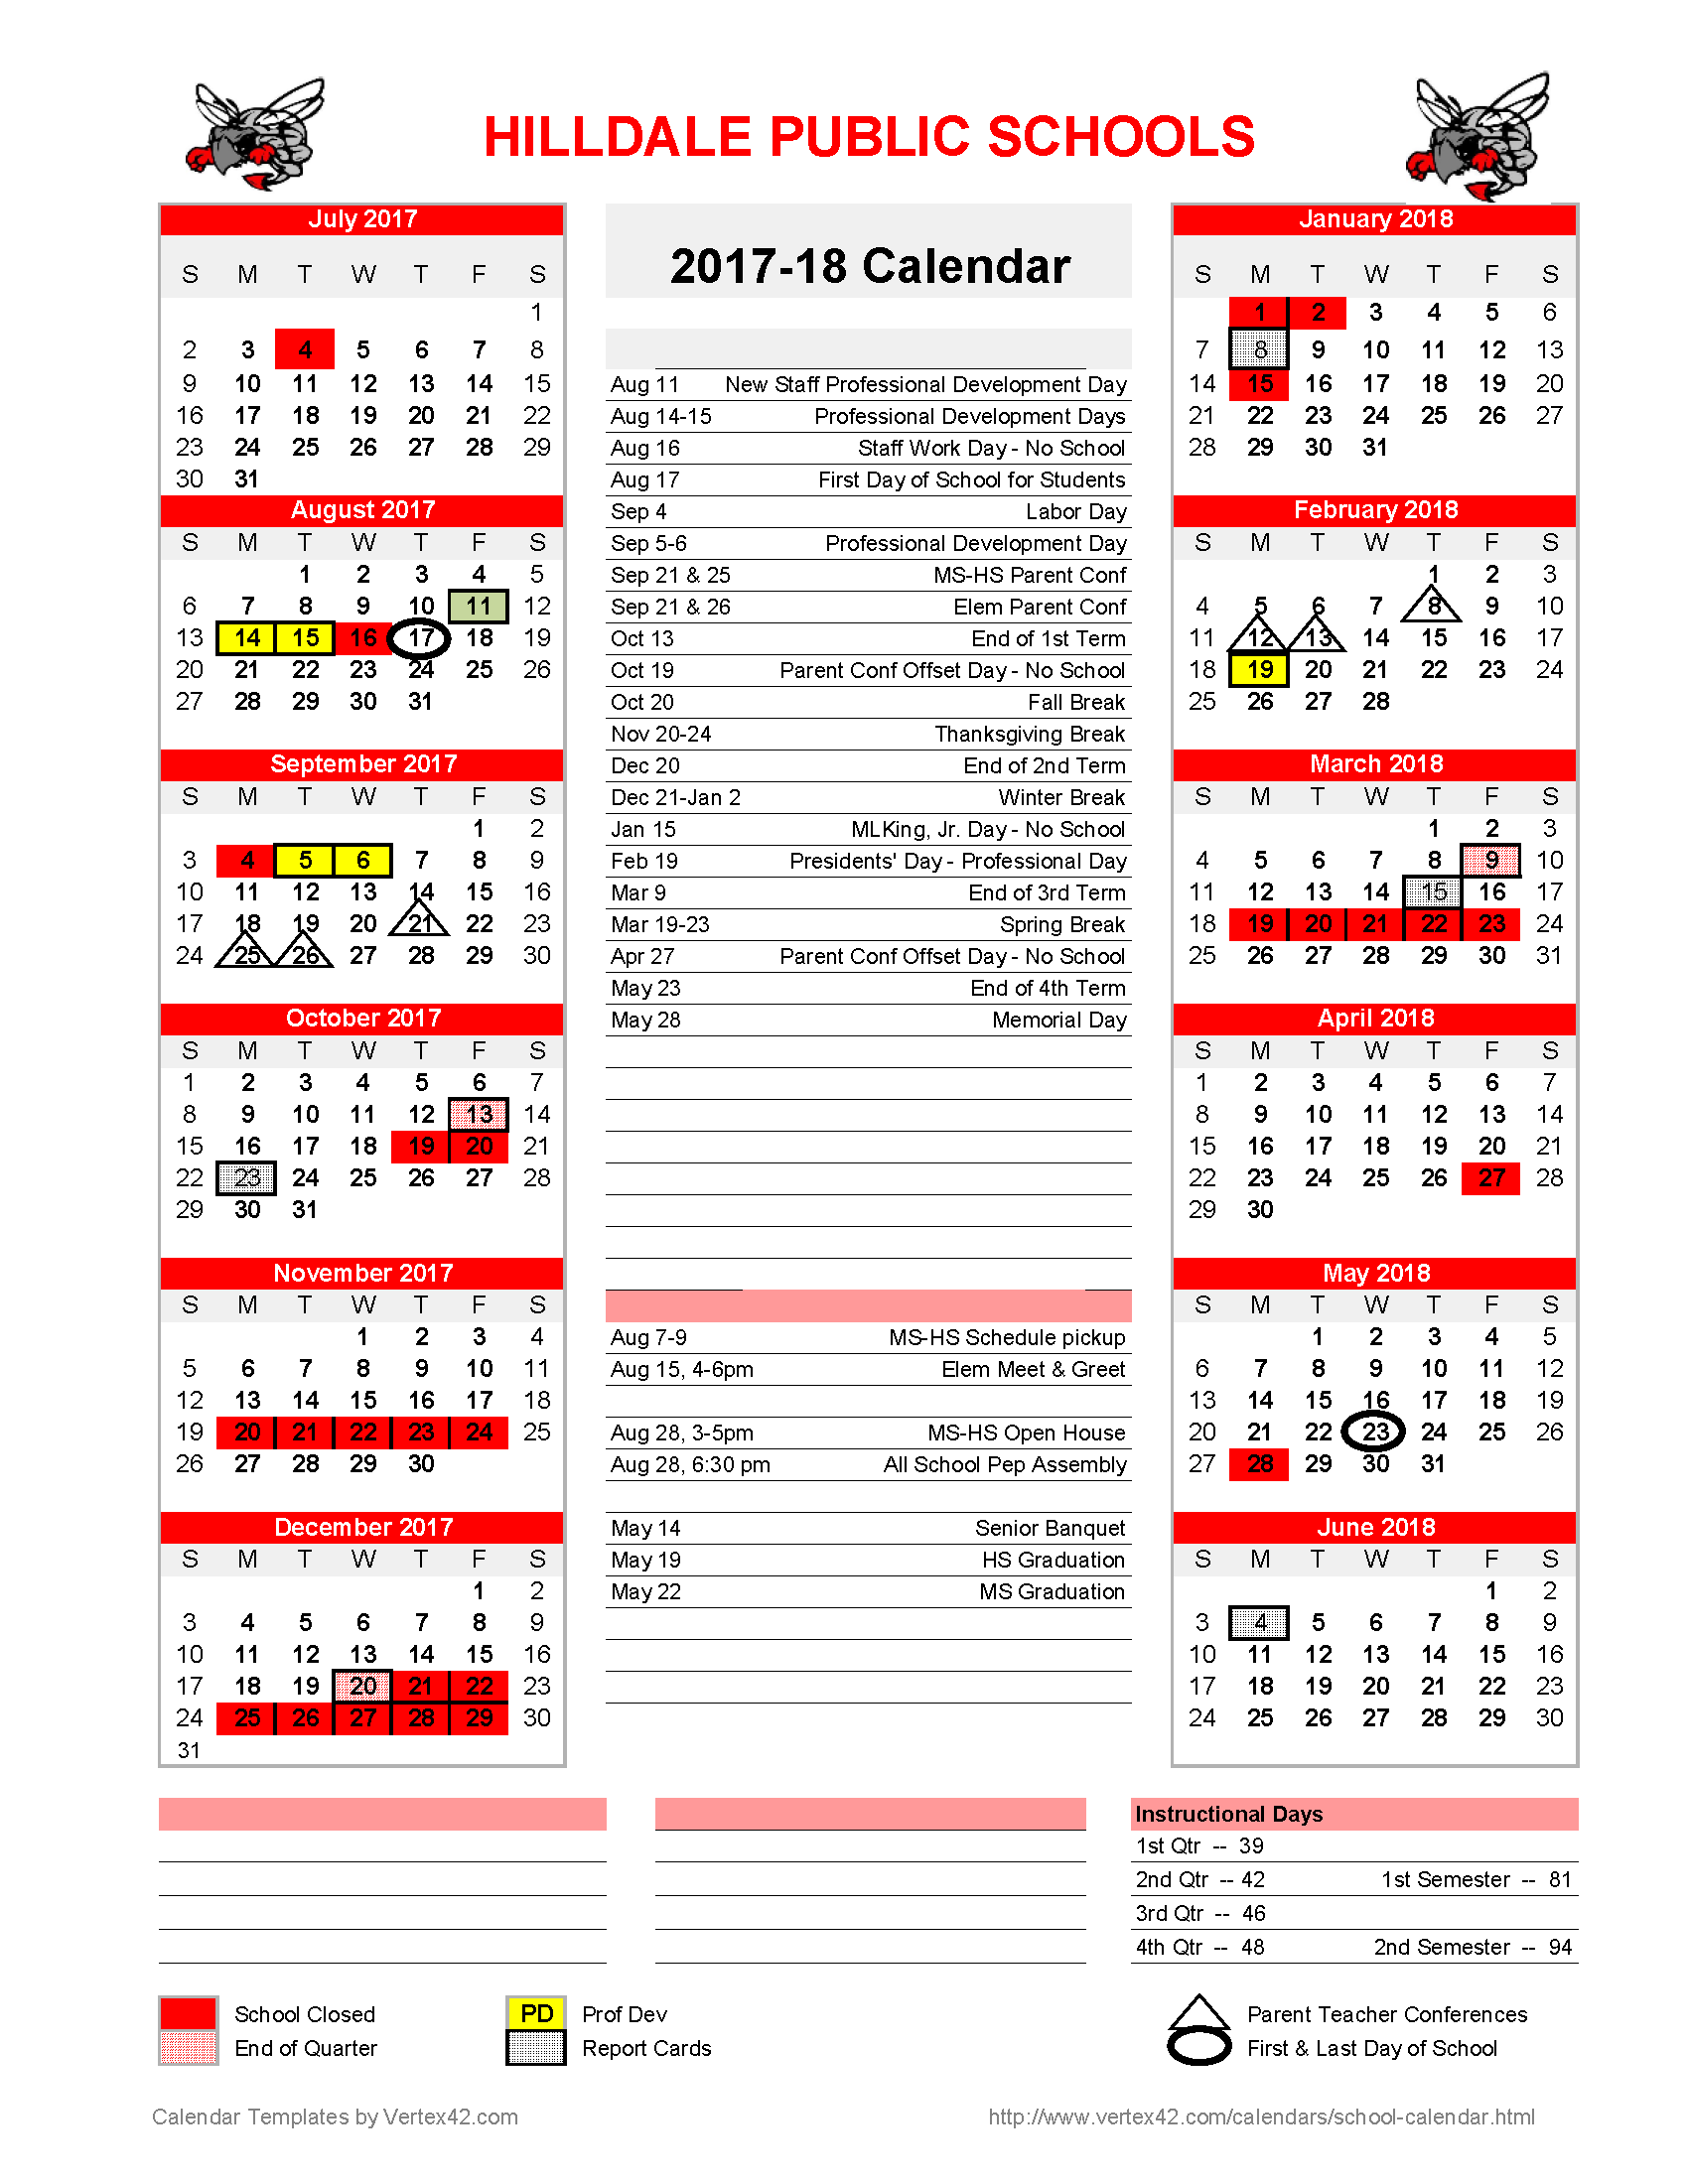 2017-2018 calendar image